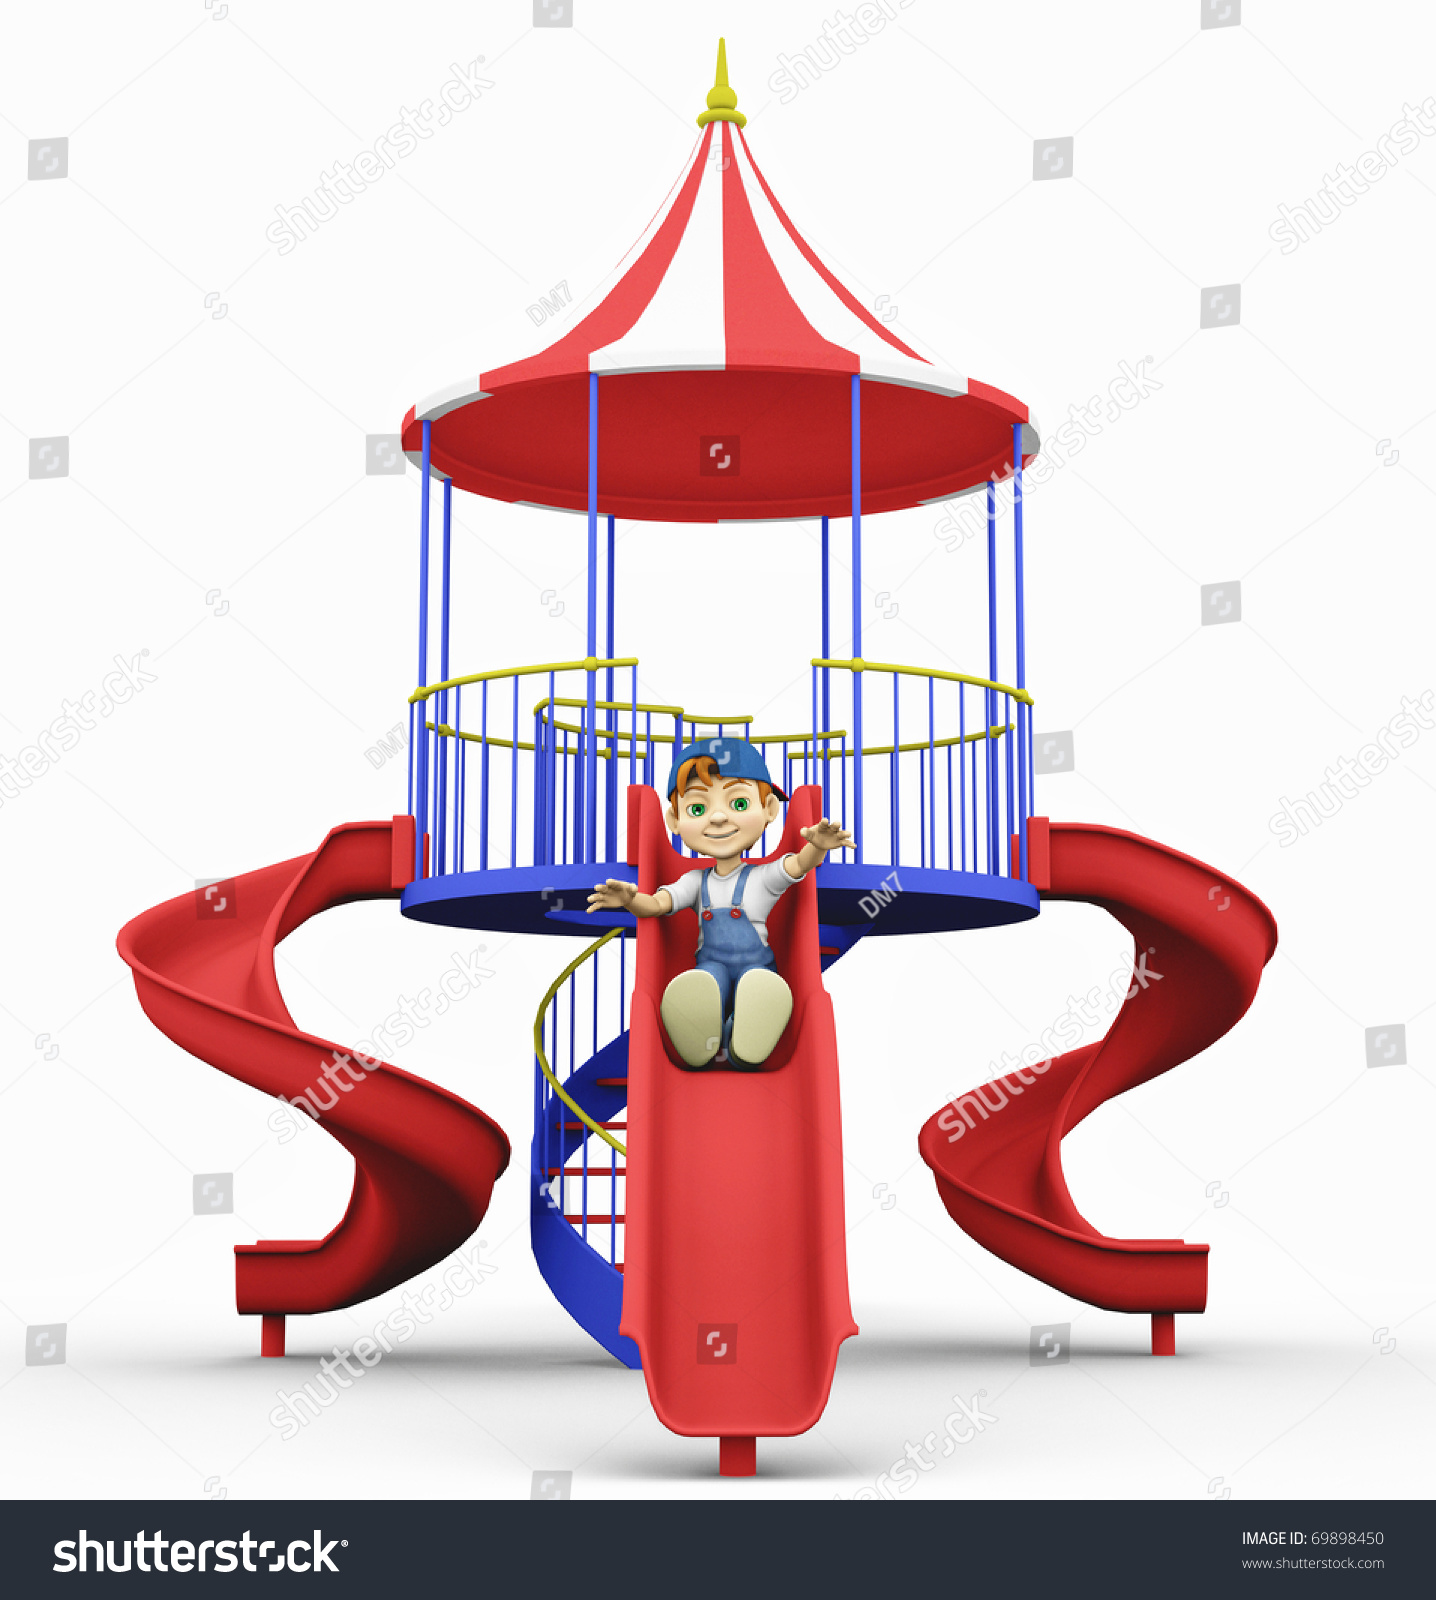 Cartoon Boy - Playground Stock Photo 69898450 : Shutterstock